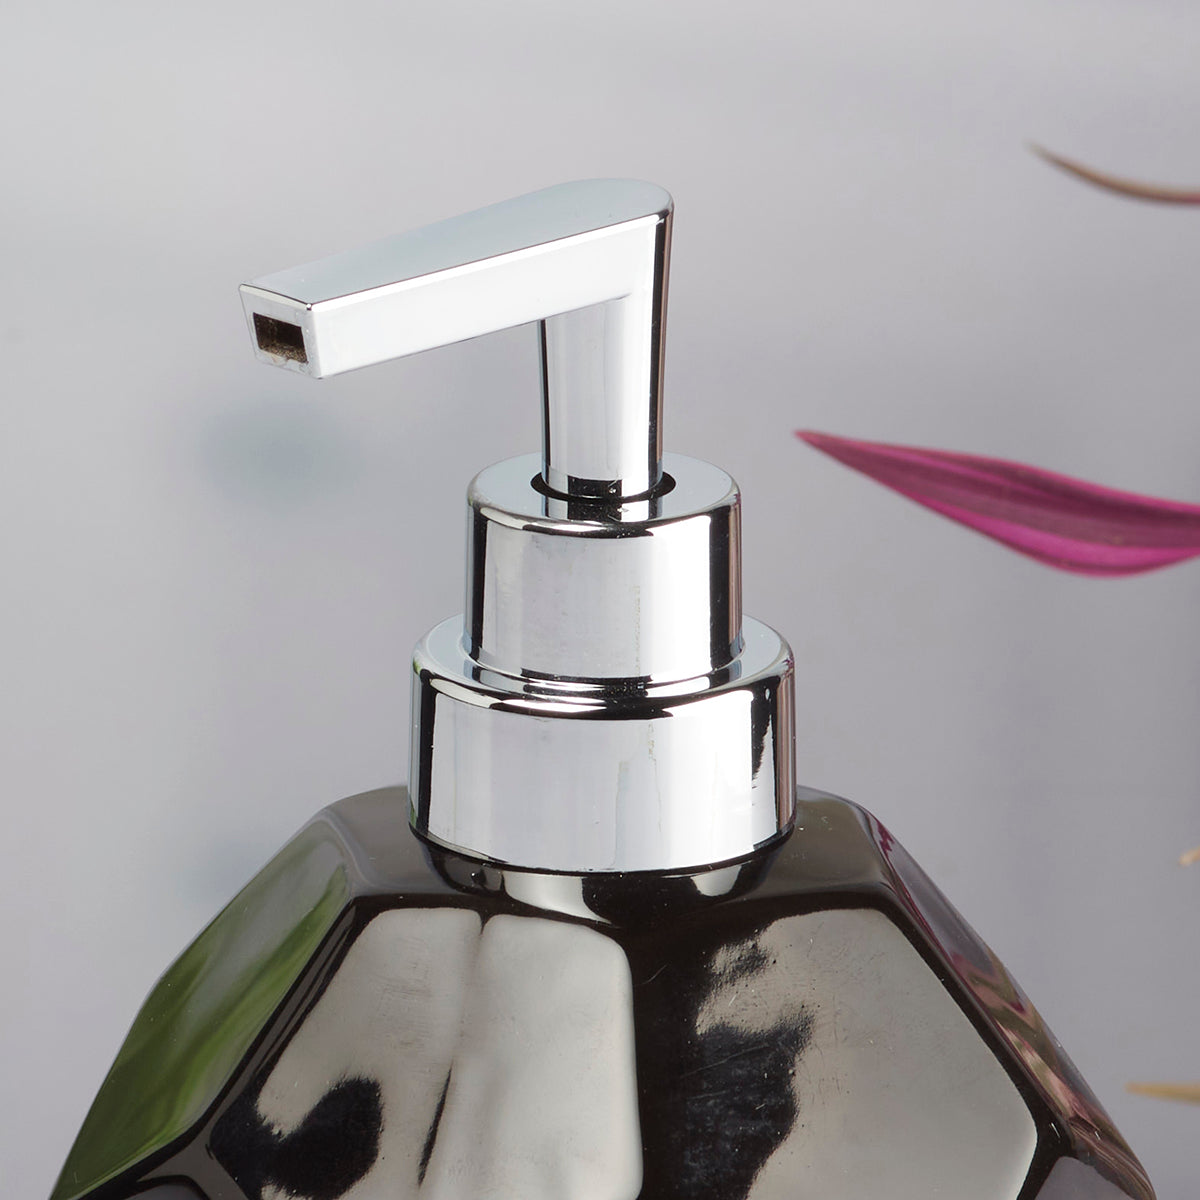 Ceramic Soap Dispenser handwash Pump for Bathroom, Set of 1, Black (8024)